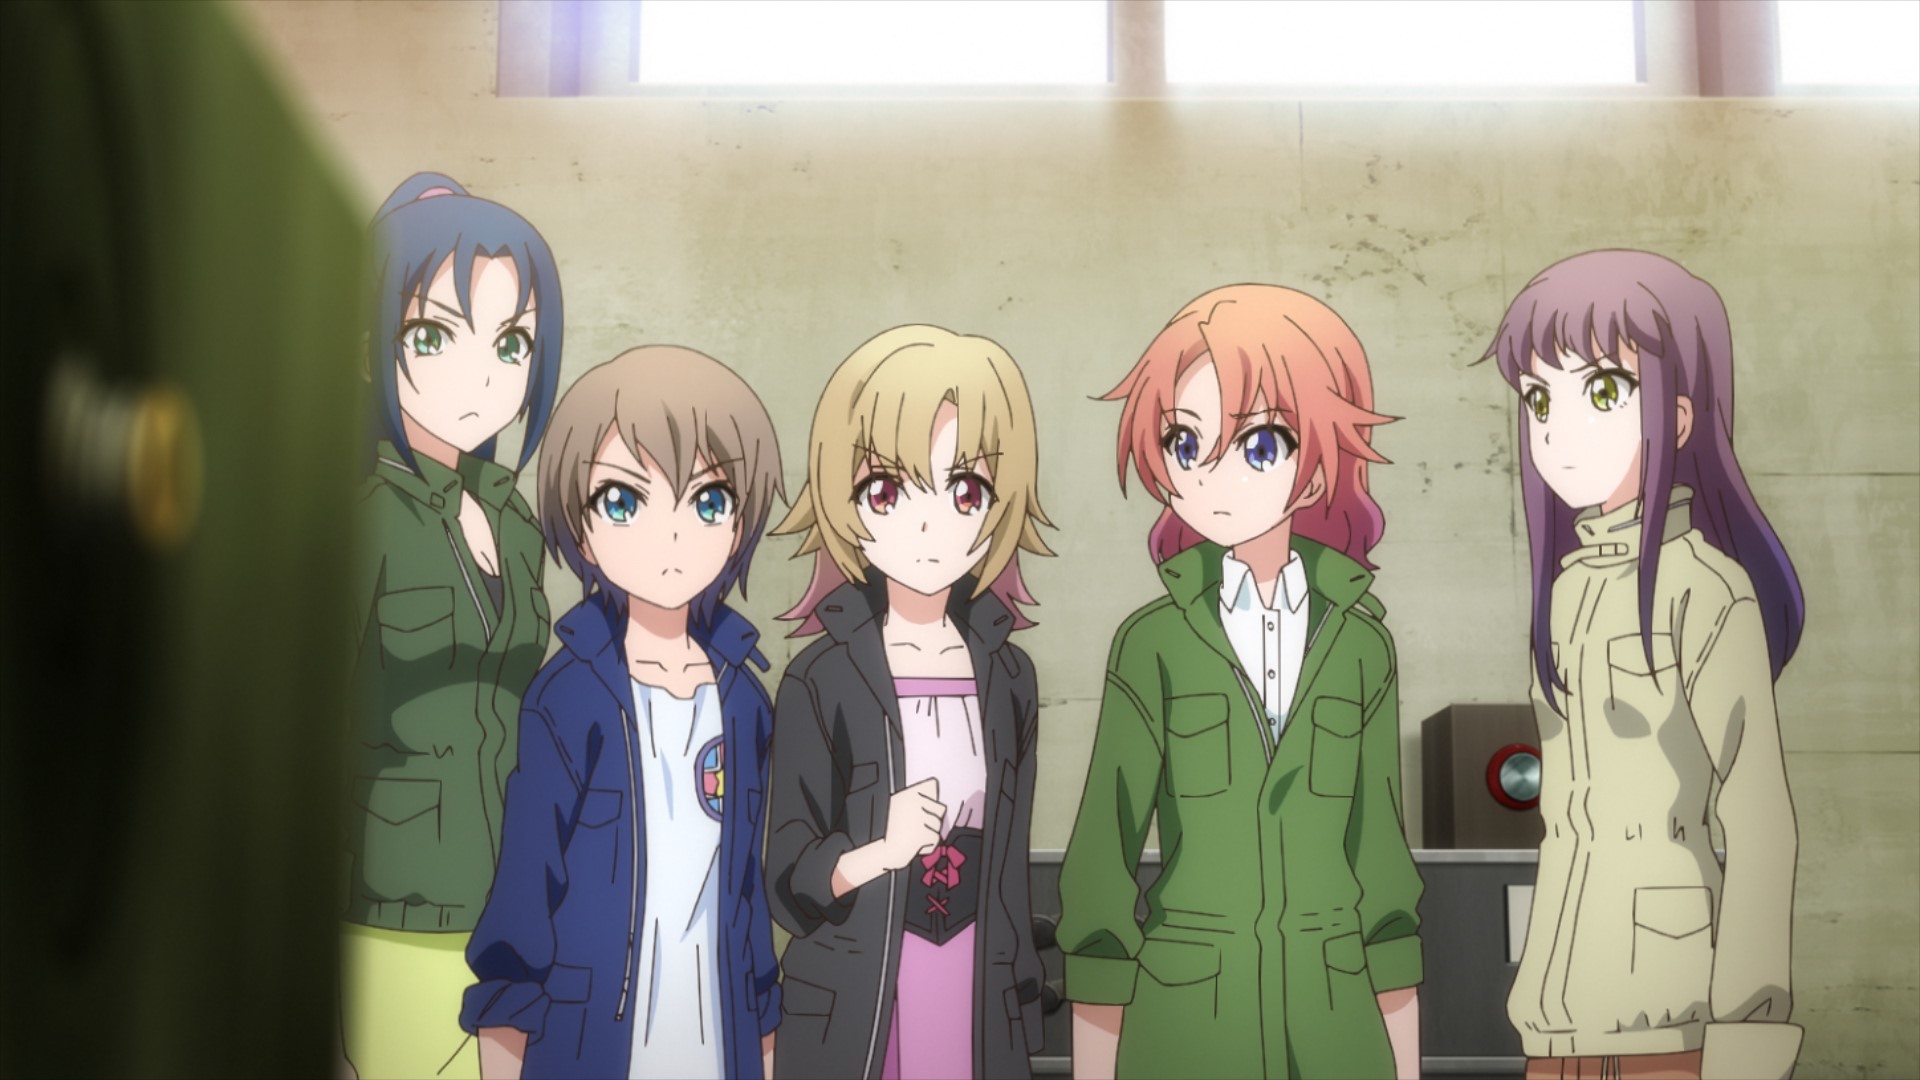 Watch Lbx Girls Season 1 Episode 3 Sub Anime Simulcast Funimation